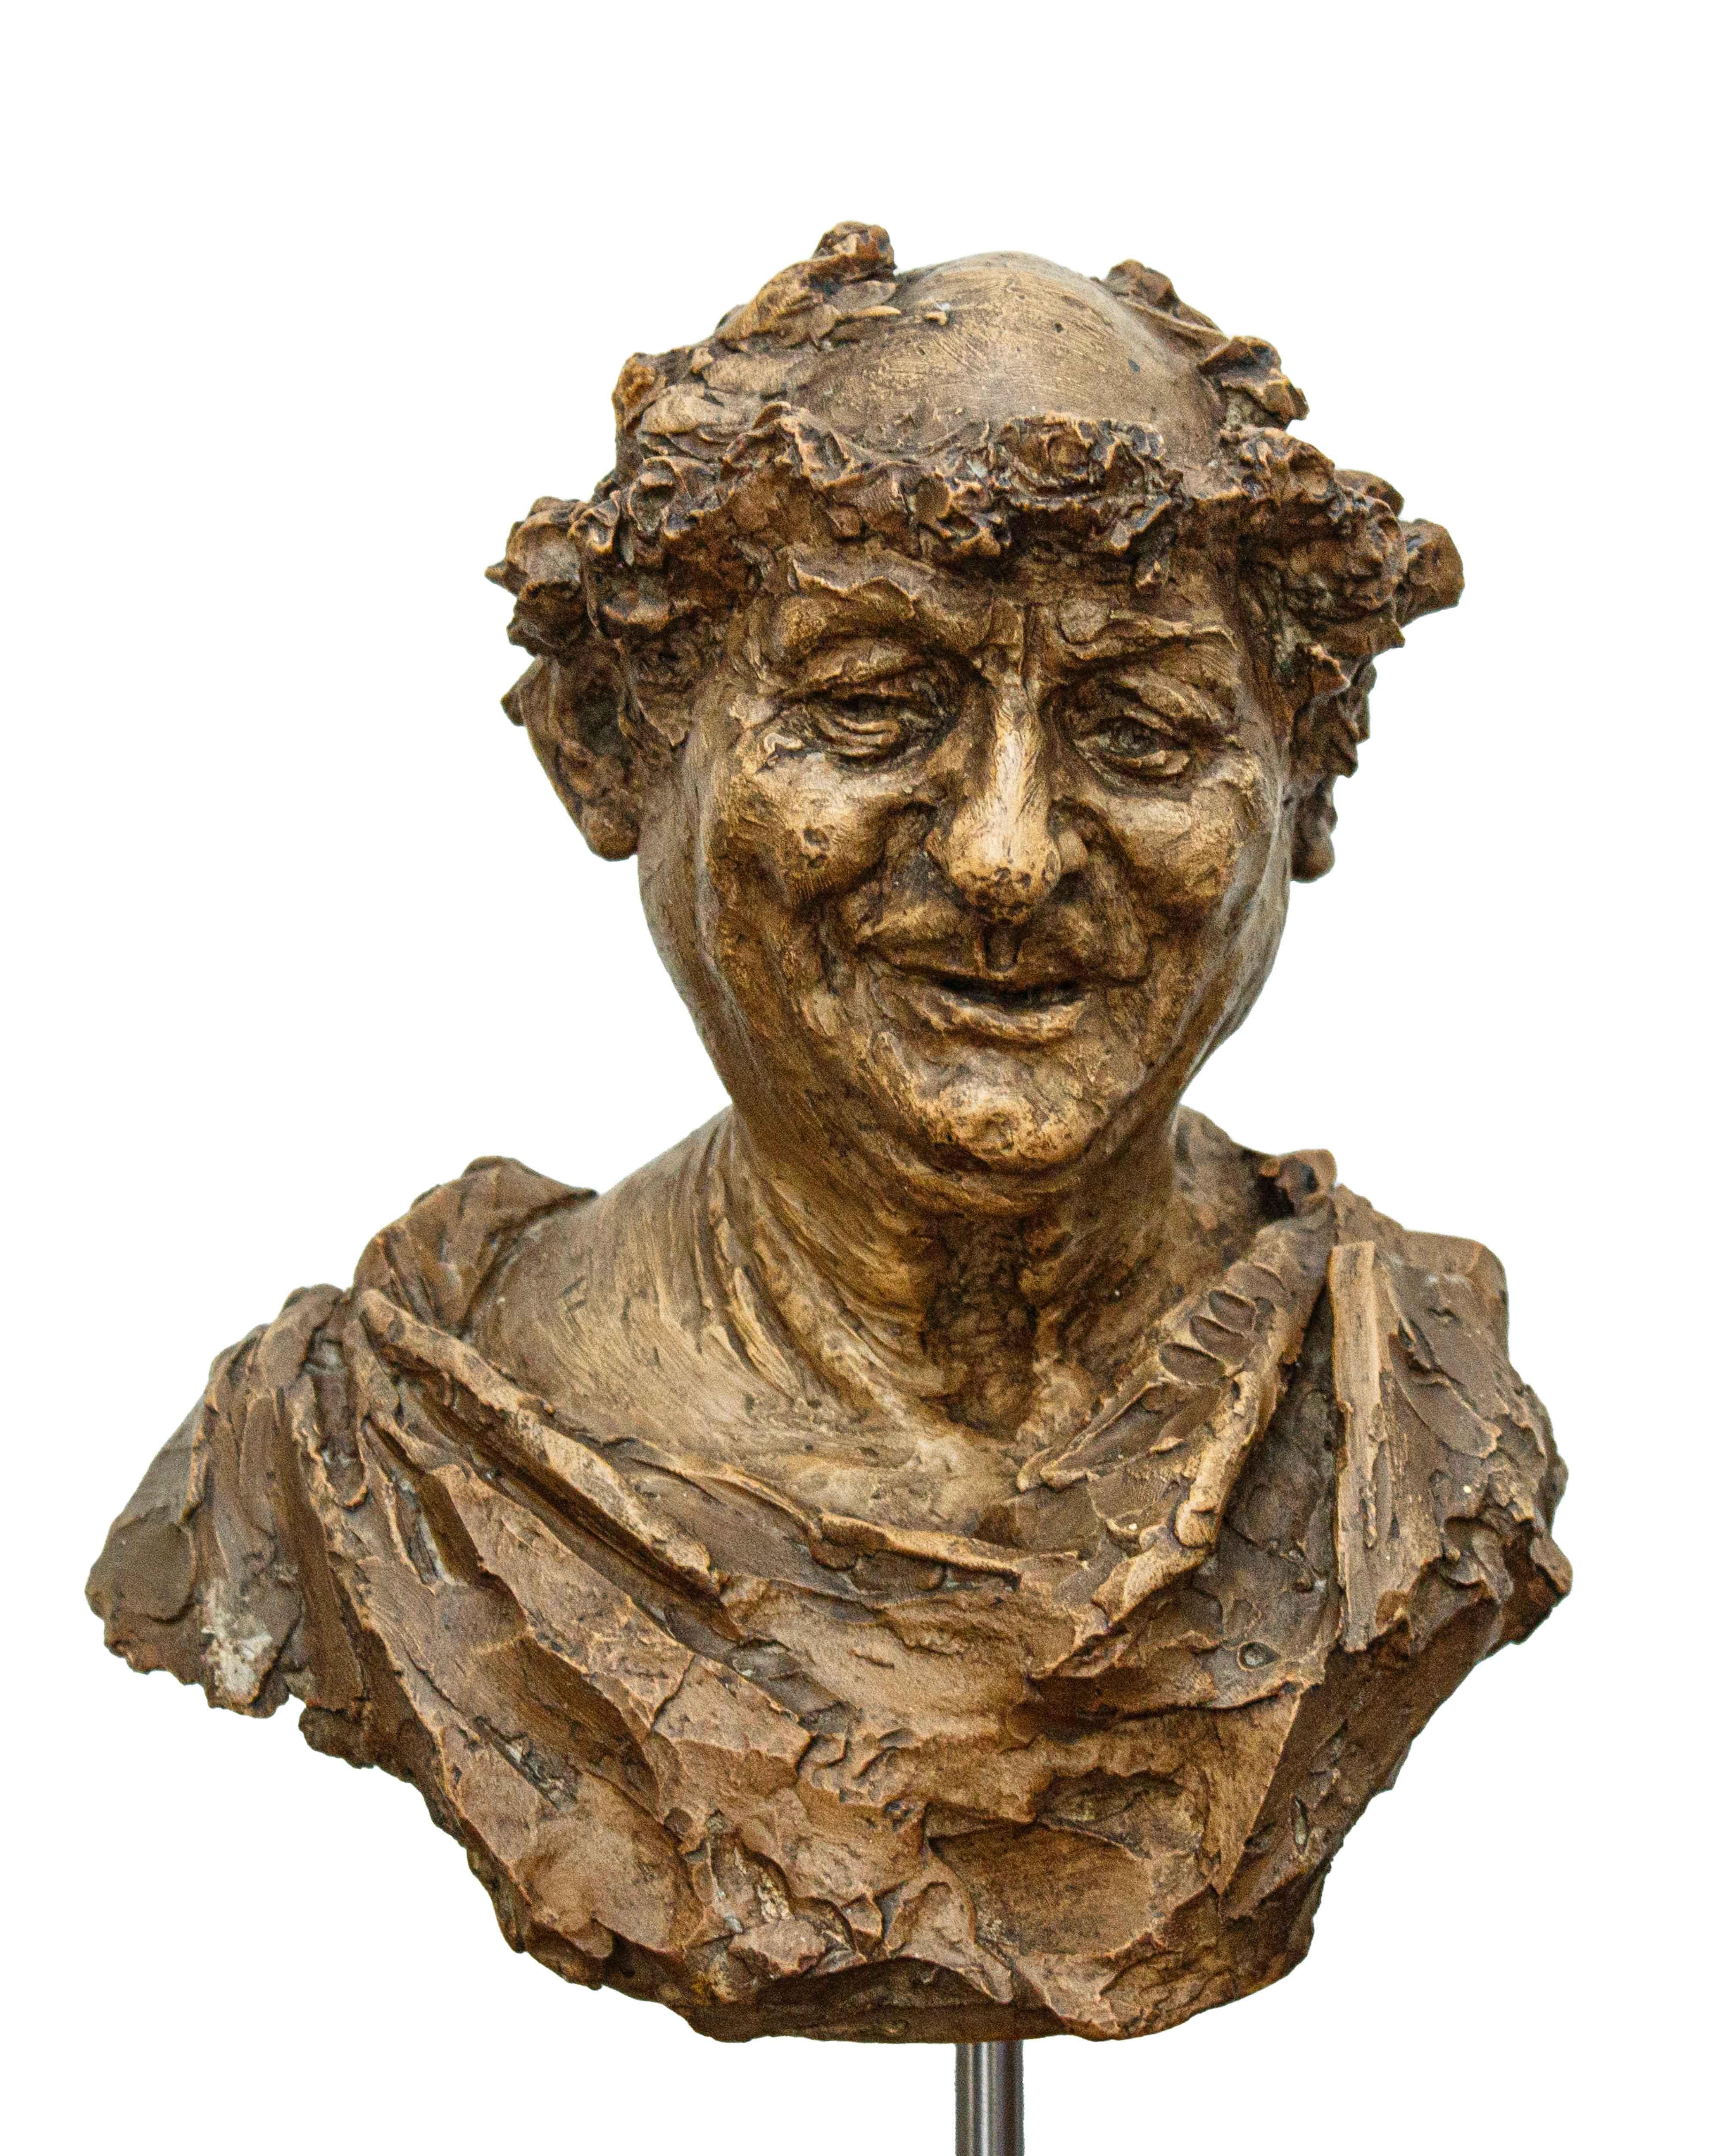 Adolfo Laurenti (Monte Porzio Catone, April 23, 1858 - Rome, 1944)

Bust of togatus

Terracotta, 21 x 18 x 12 cm

Adolfo Laurenti was born on April 23, 1858, in Monte Porzio (since 1872 Monte Porzio Catone). A pupil of the National Academy of San